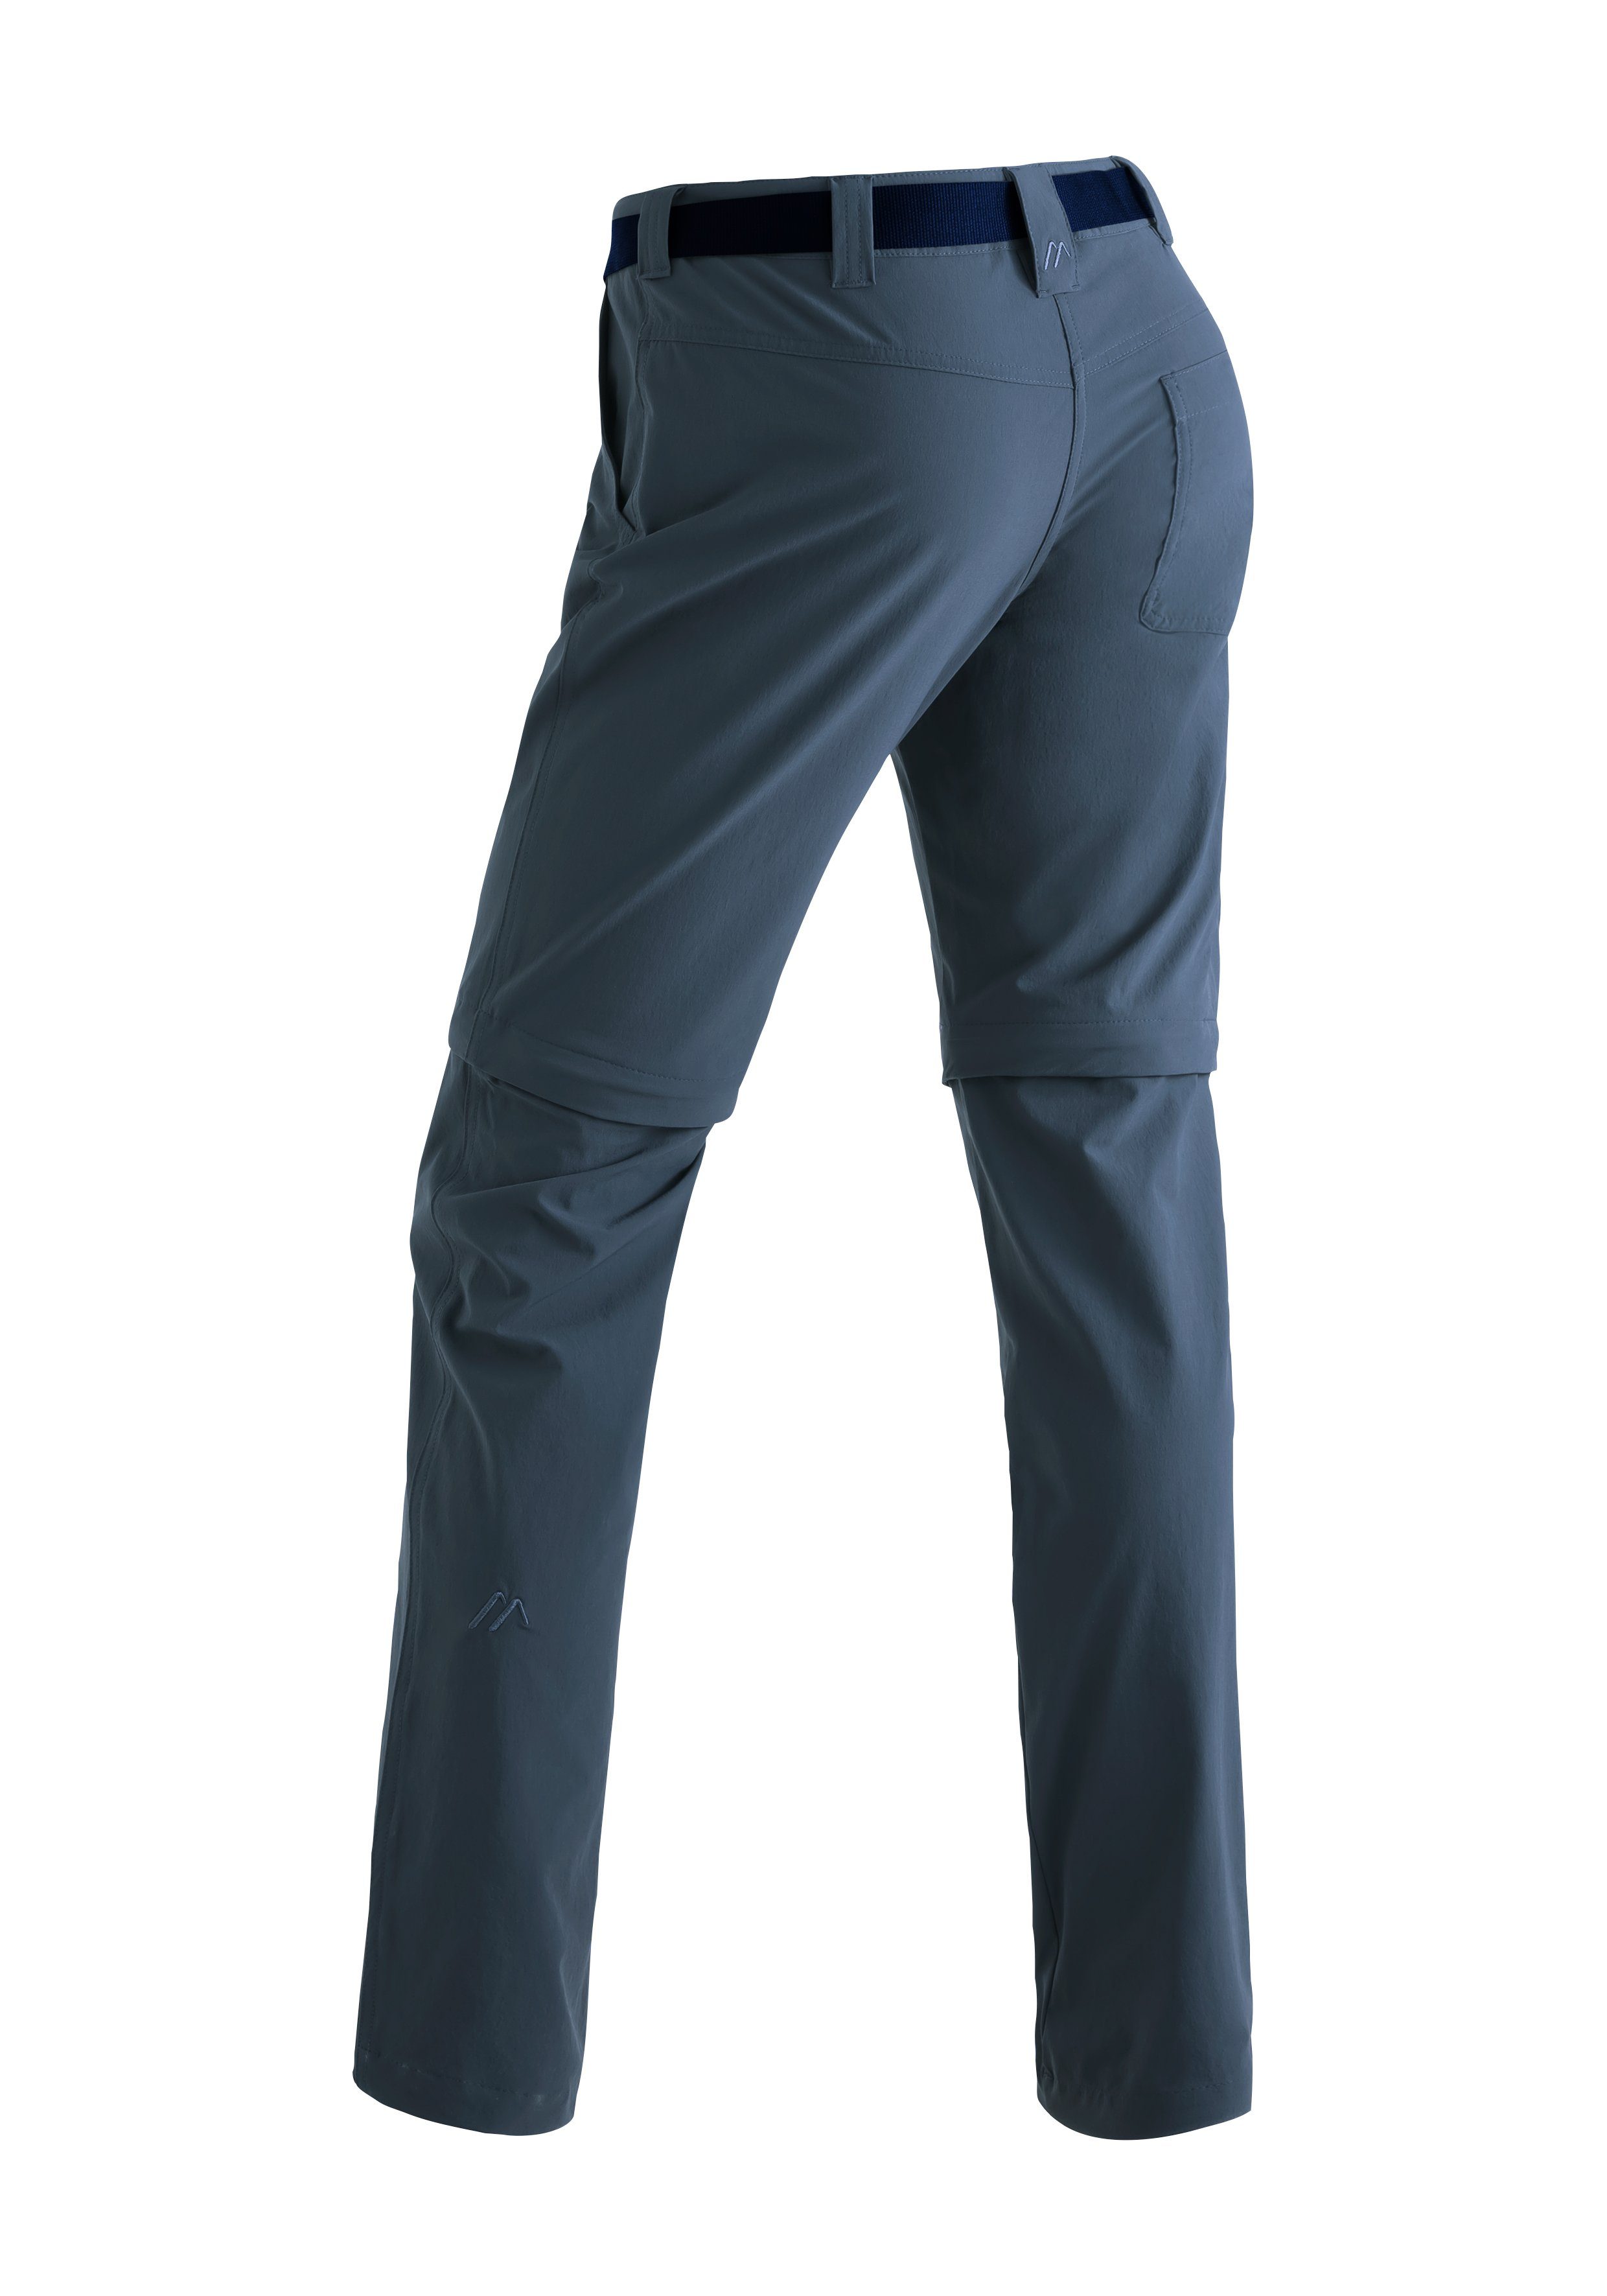 Maier Sports Funktionshose Inara slim zip Damen zipp-off Wanderhose, atmungsaktive Outdoor-Hose jeansblau